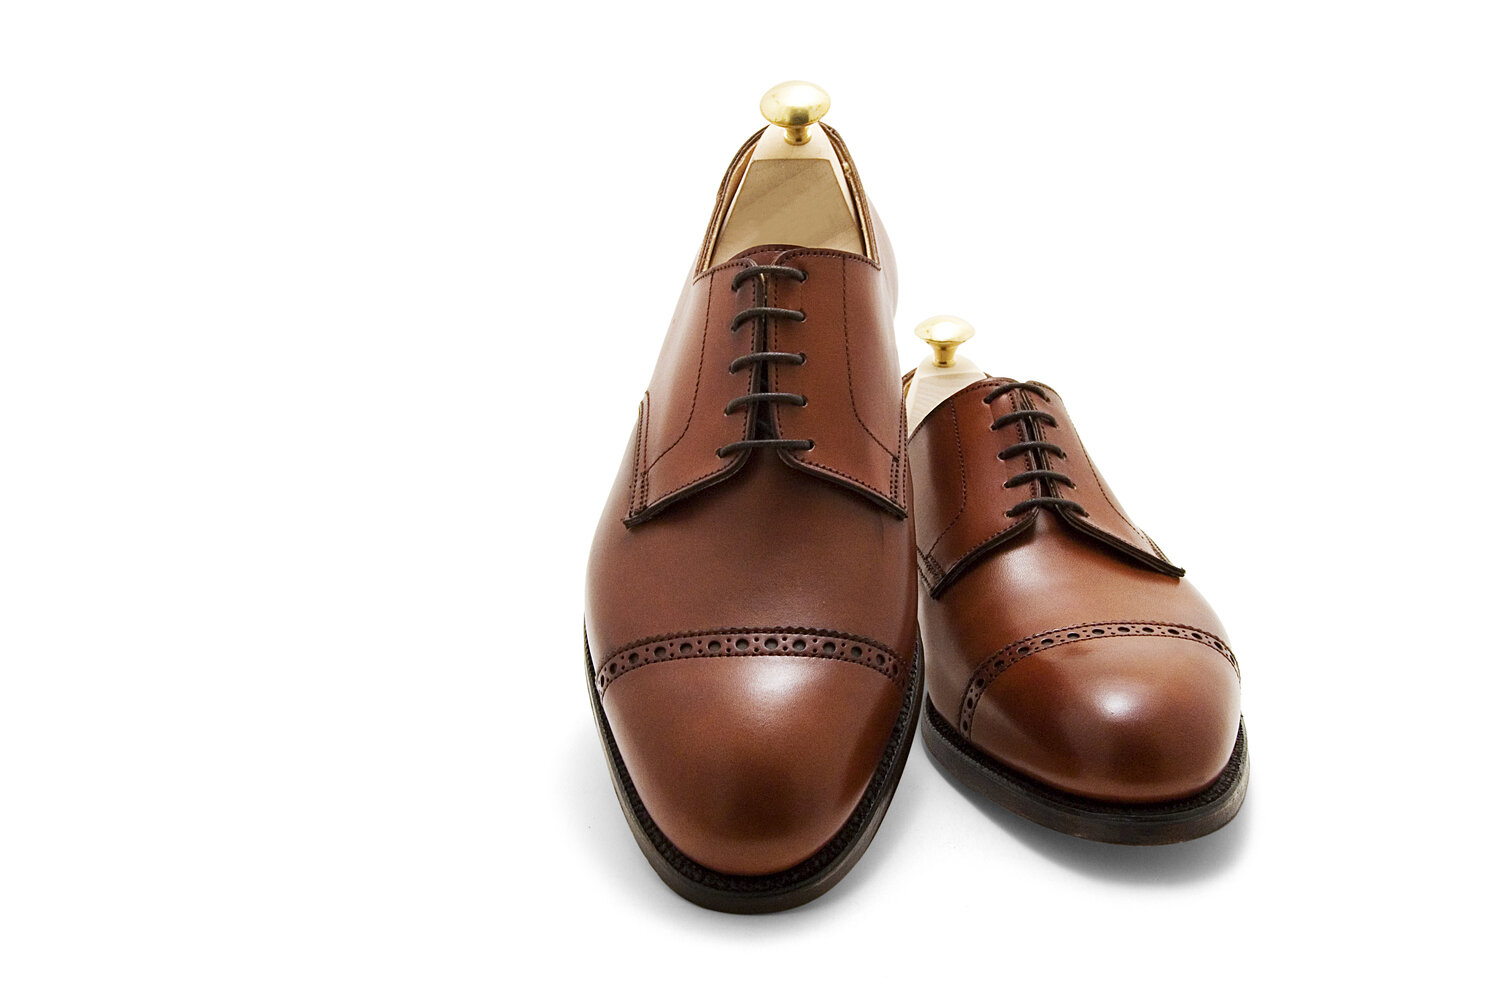 Crockett & Jones Draycott 2 Oxford Chestnut Calf-Sky valet shoes